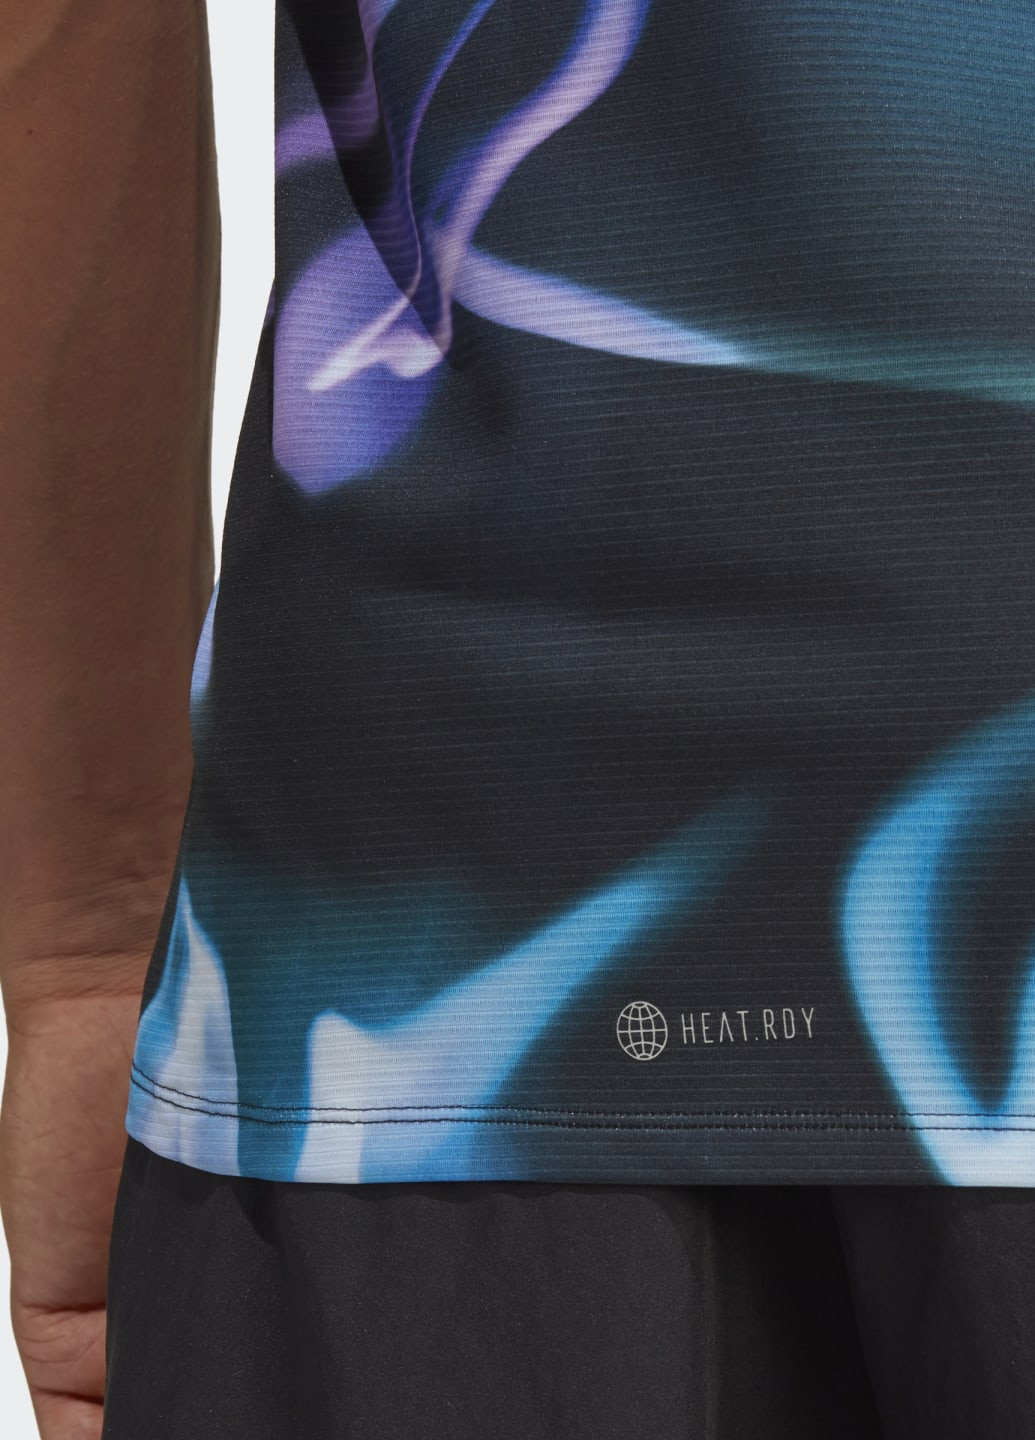 Фіолетова тренувальна футболка designed 4 training heat.rdy allover print hiit adidas